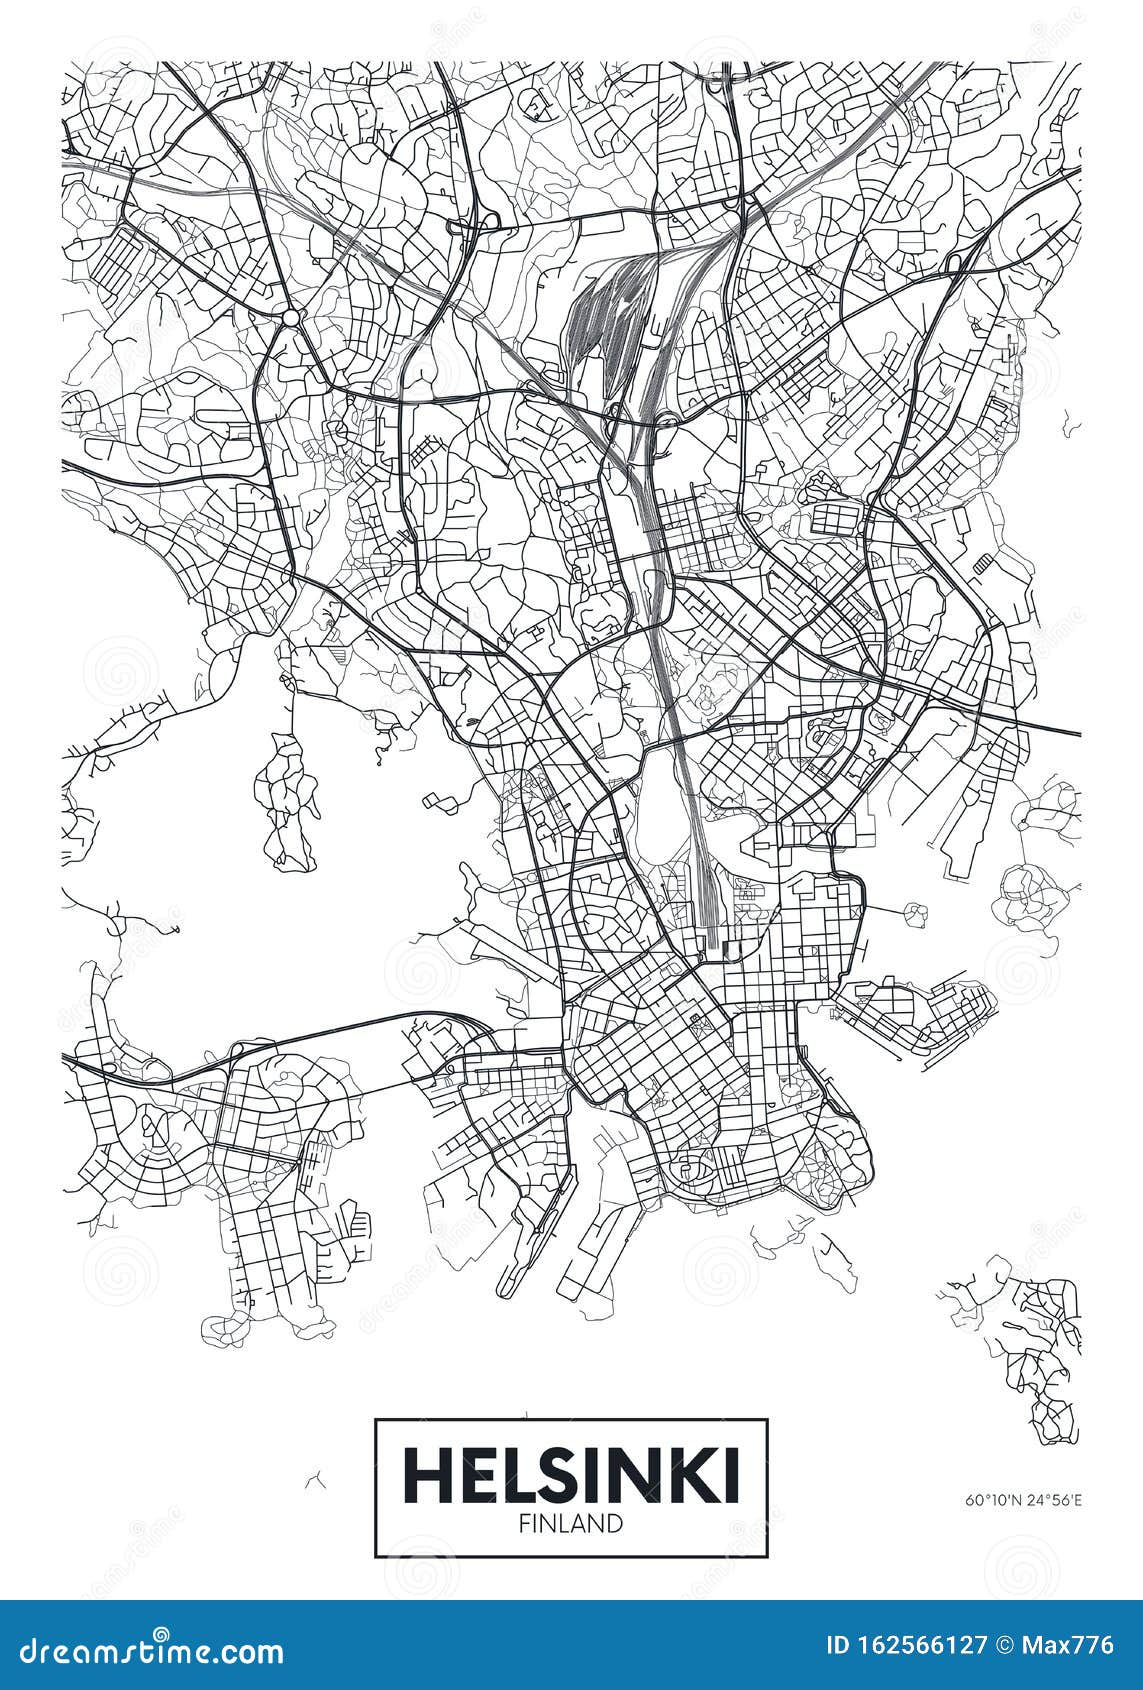 HELSINKI CITY MAP POSTER PRINT MODERN CONTEMPORARY CITIES TRAVEL IKEA FRAMES 